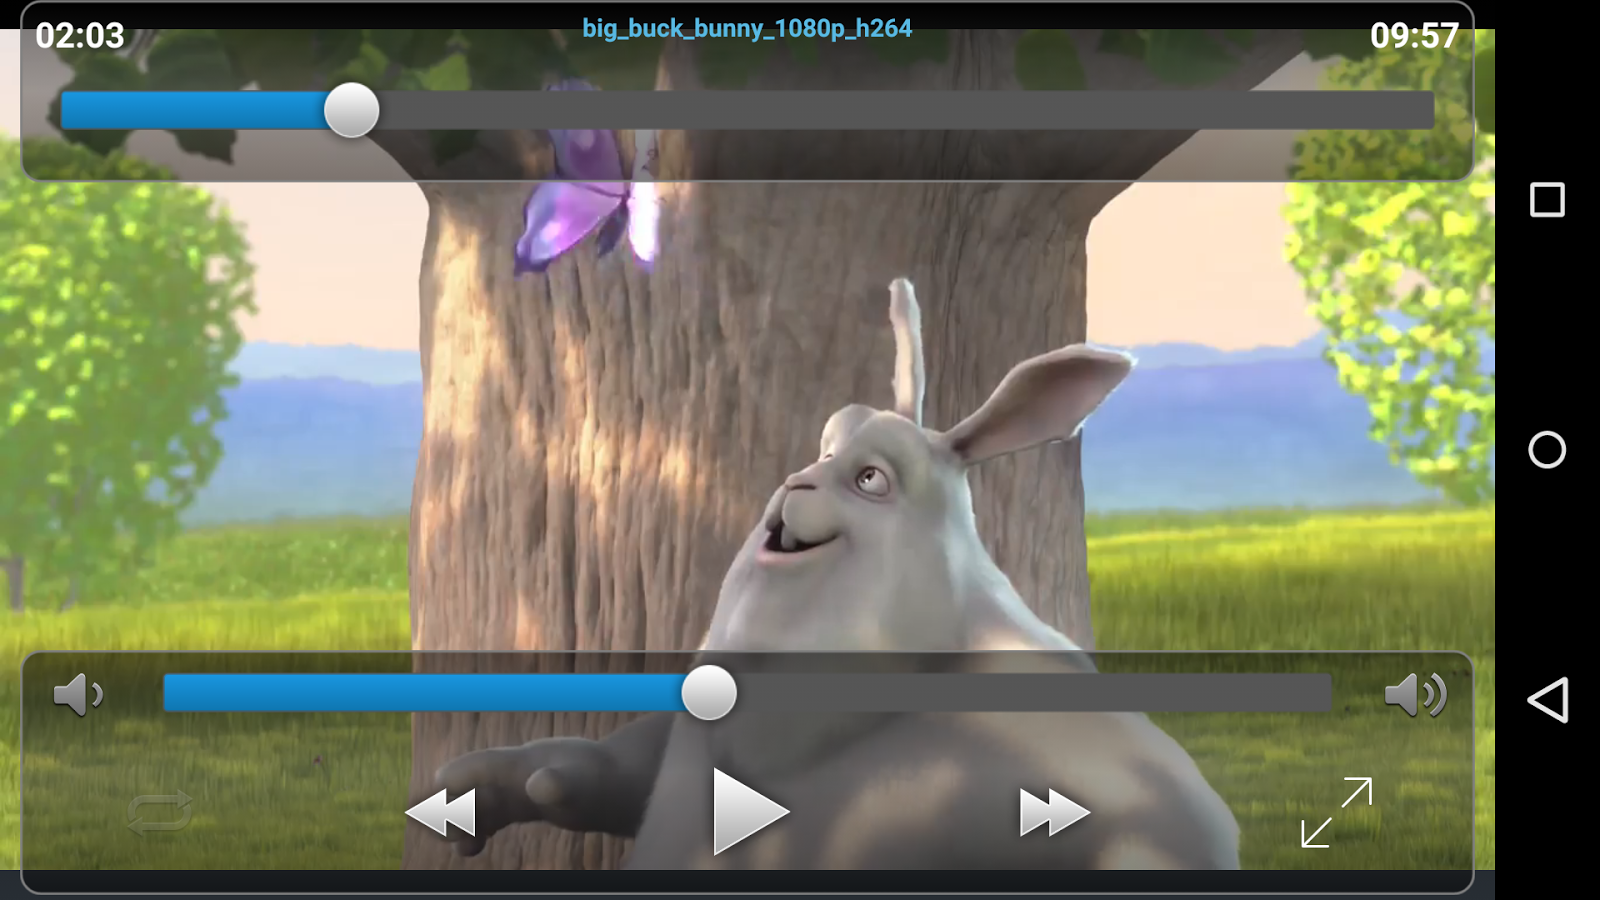    VLC Streamer- screenshot  